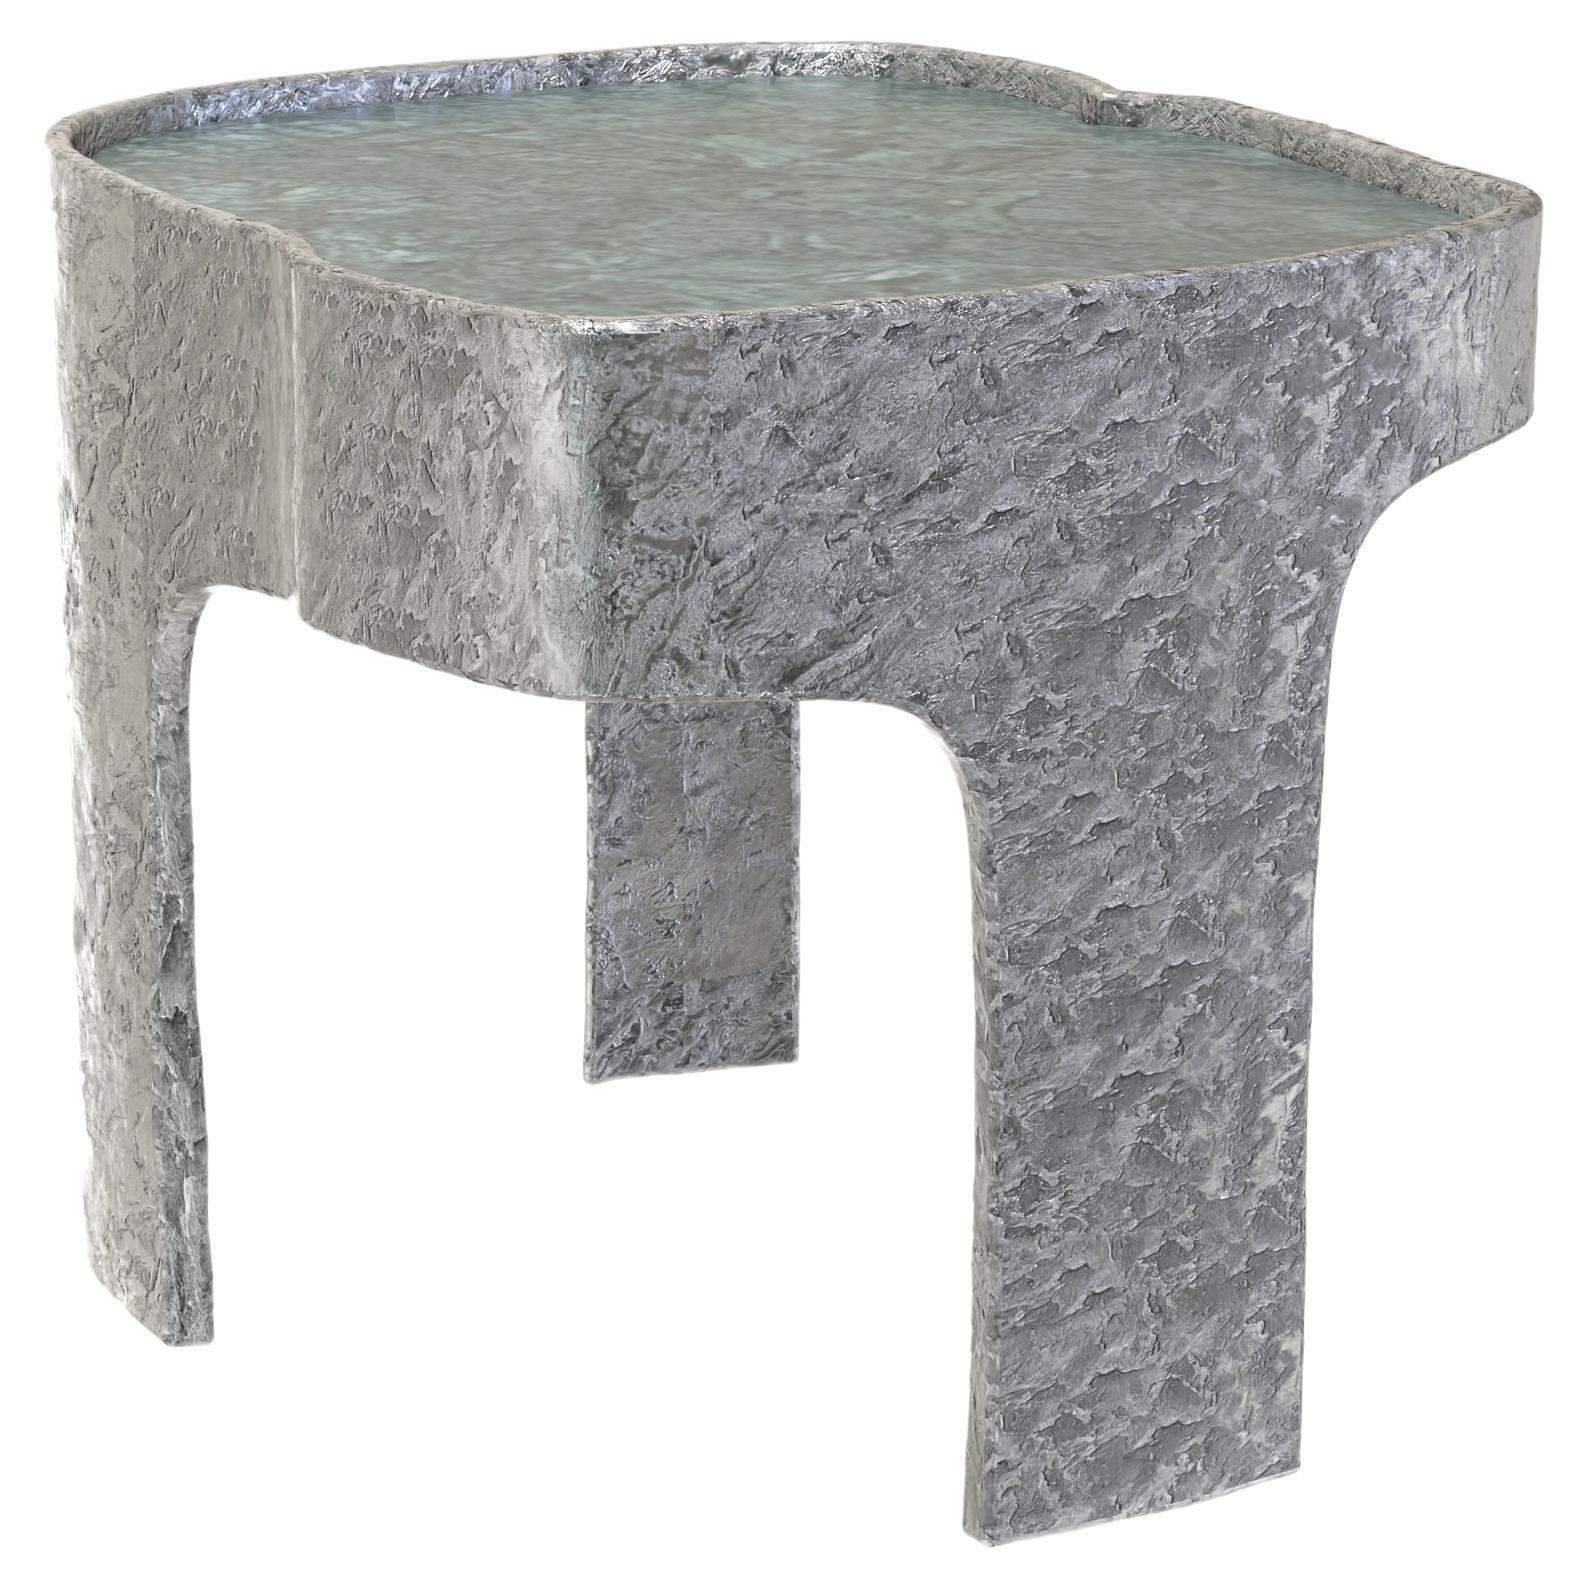 Table en aluminium et marbre Sumatra V1 en édition limitée, Edizione Limitata